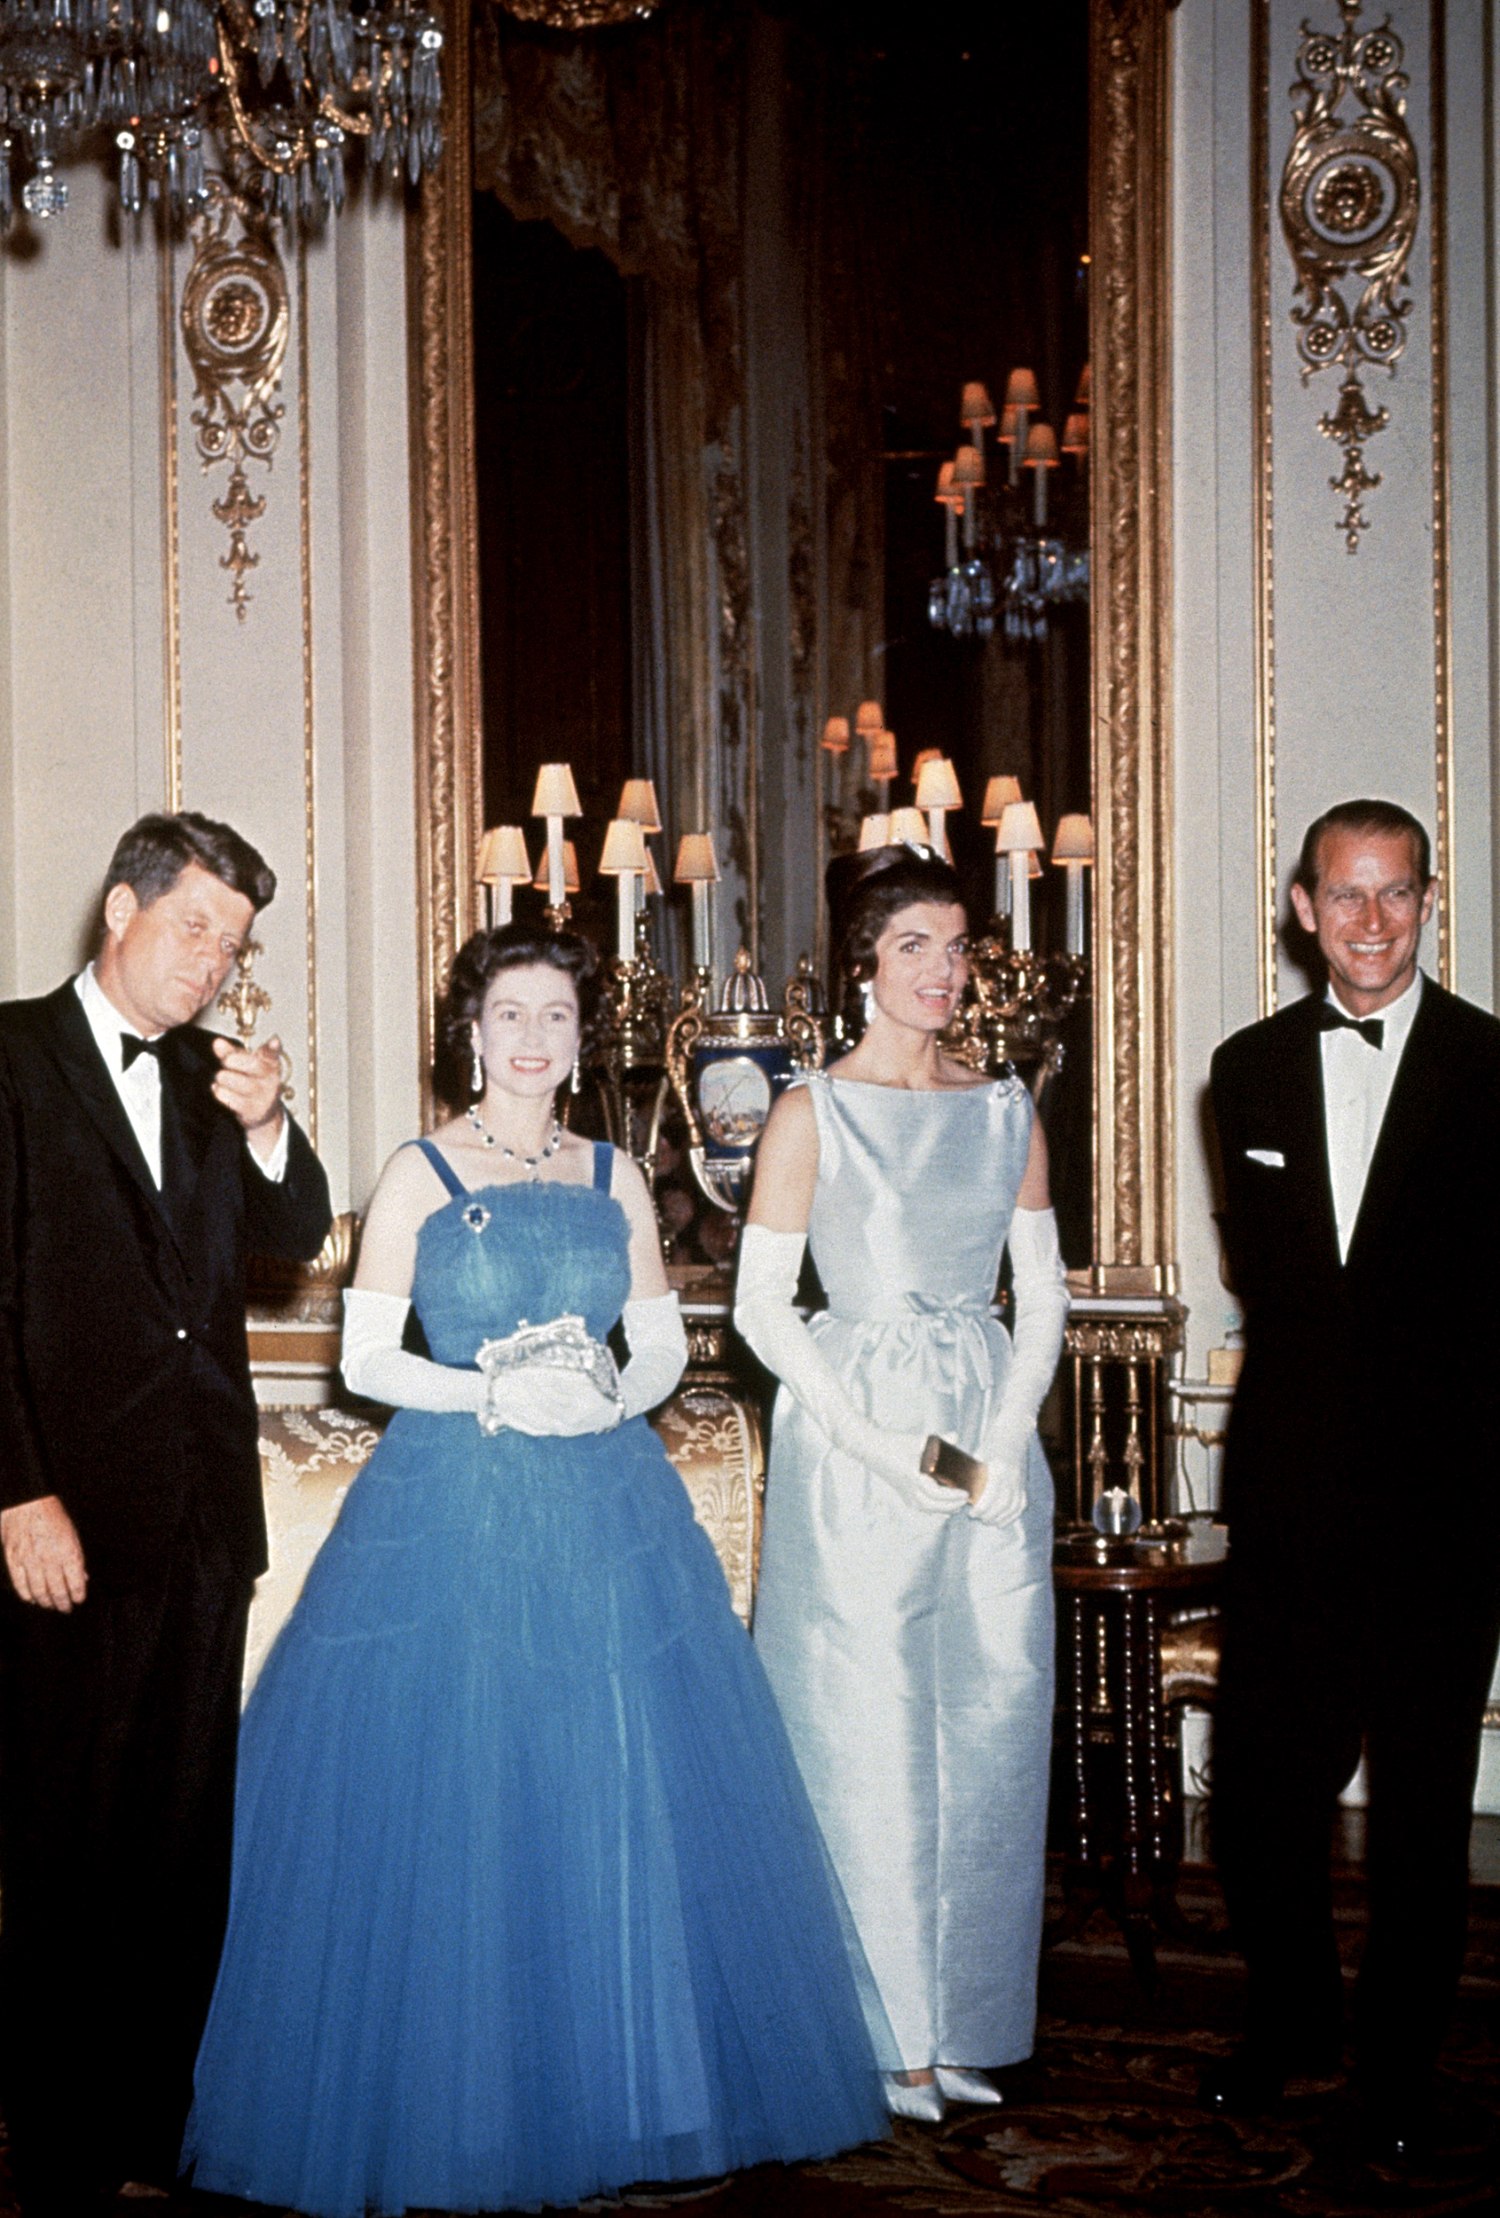 Did Queen Elizabeth II Snub Jackie Kennedy For Unflattering